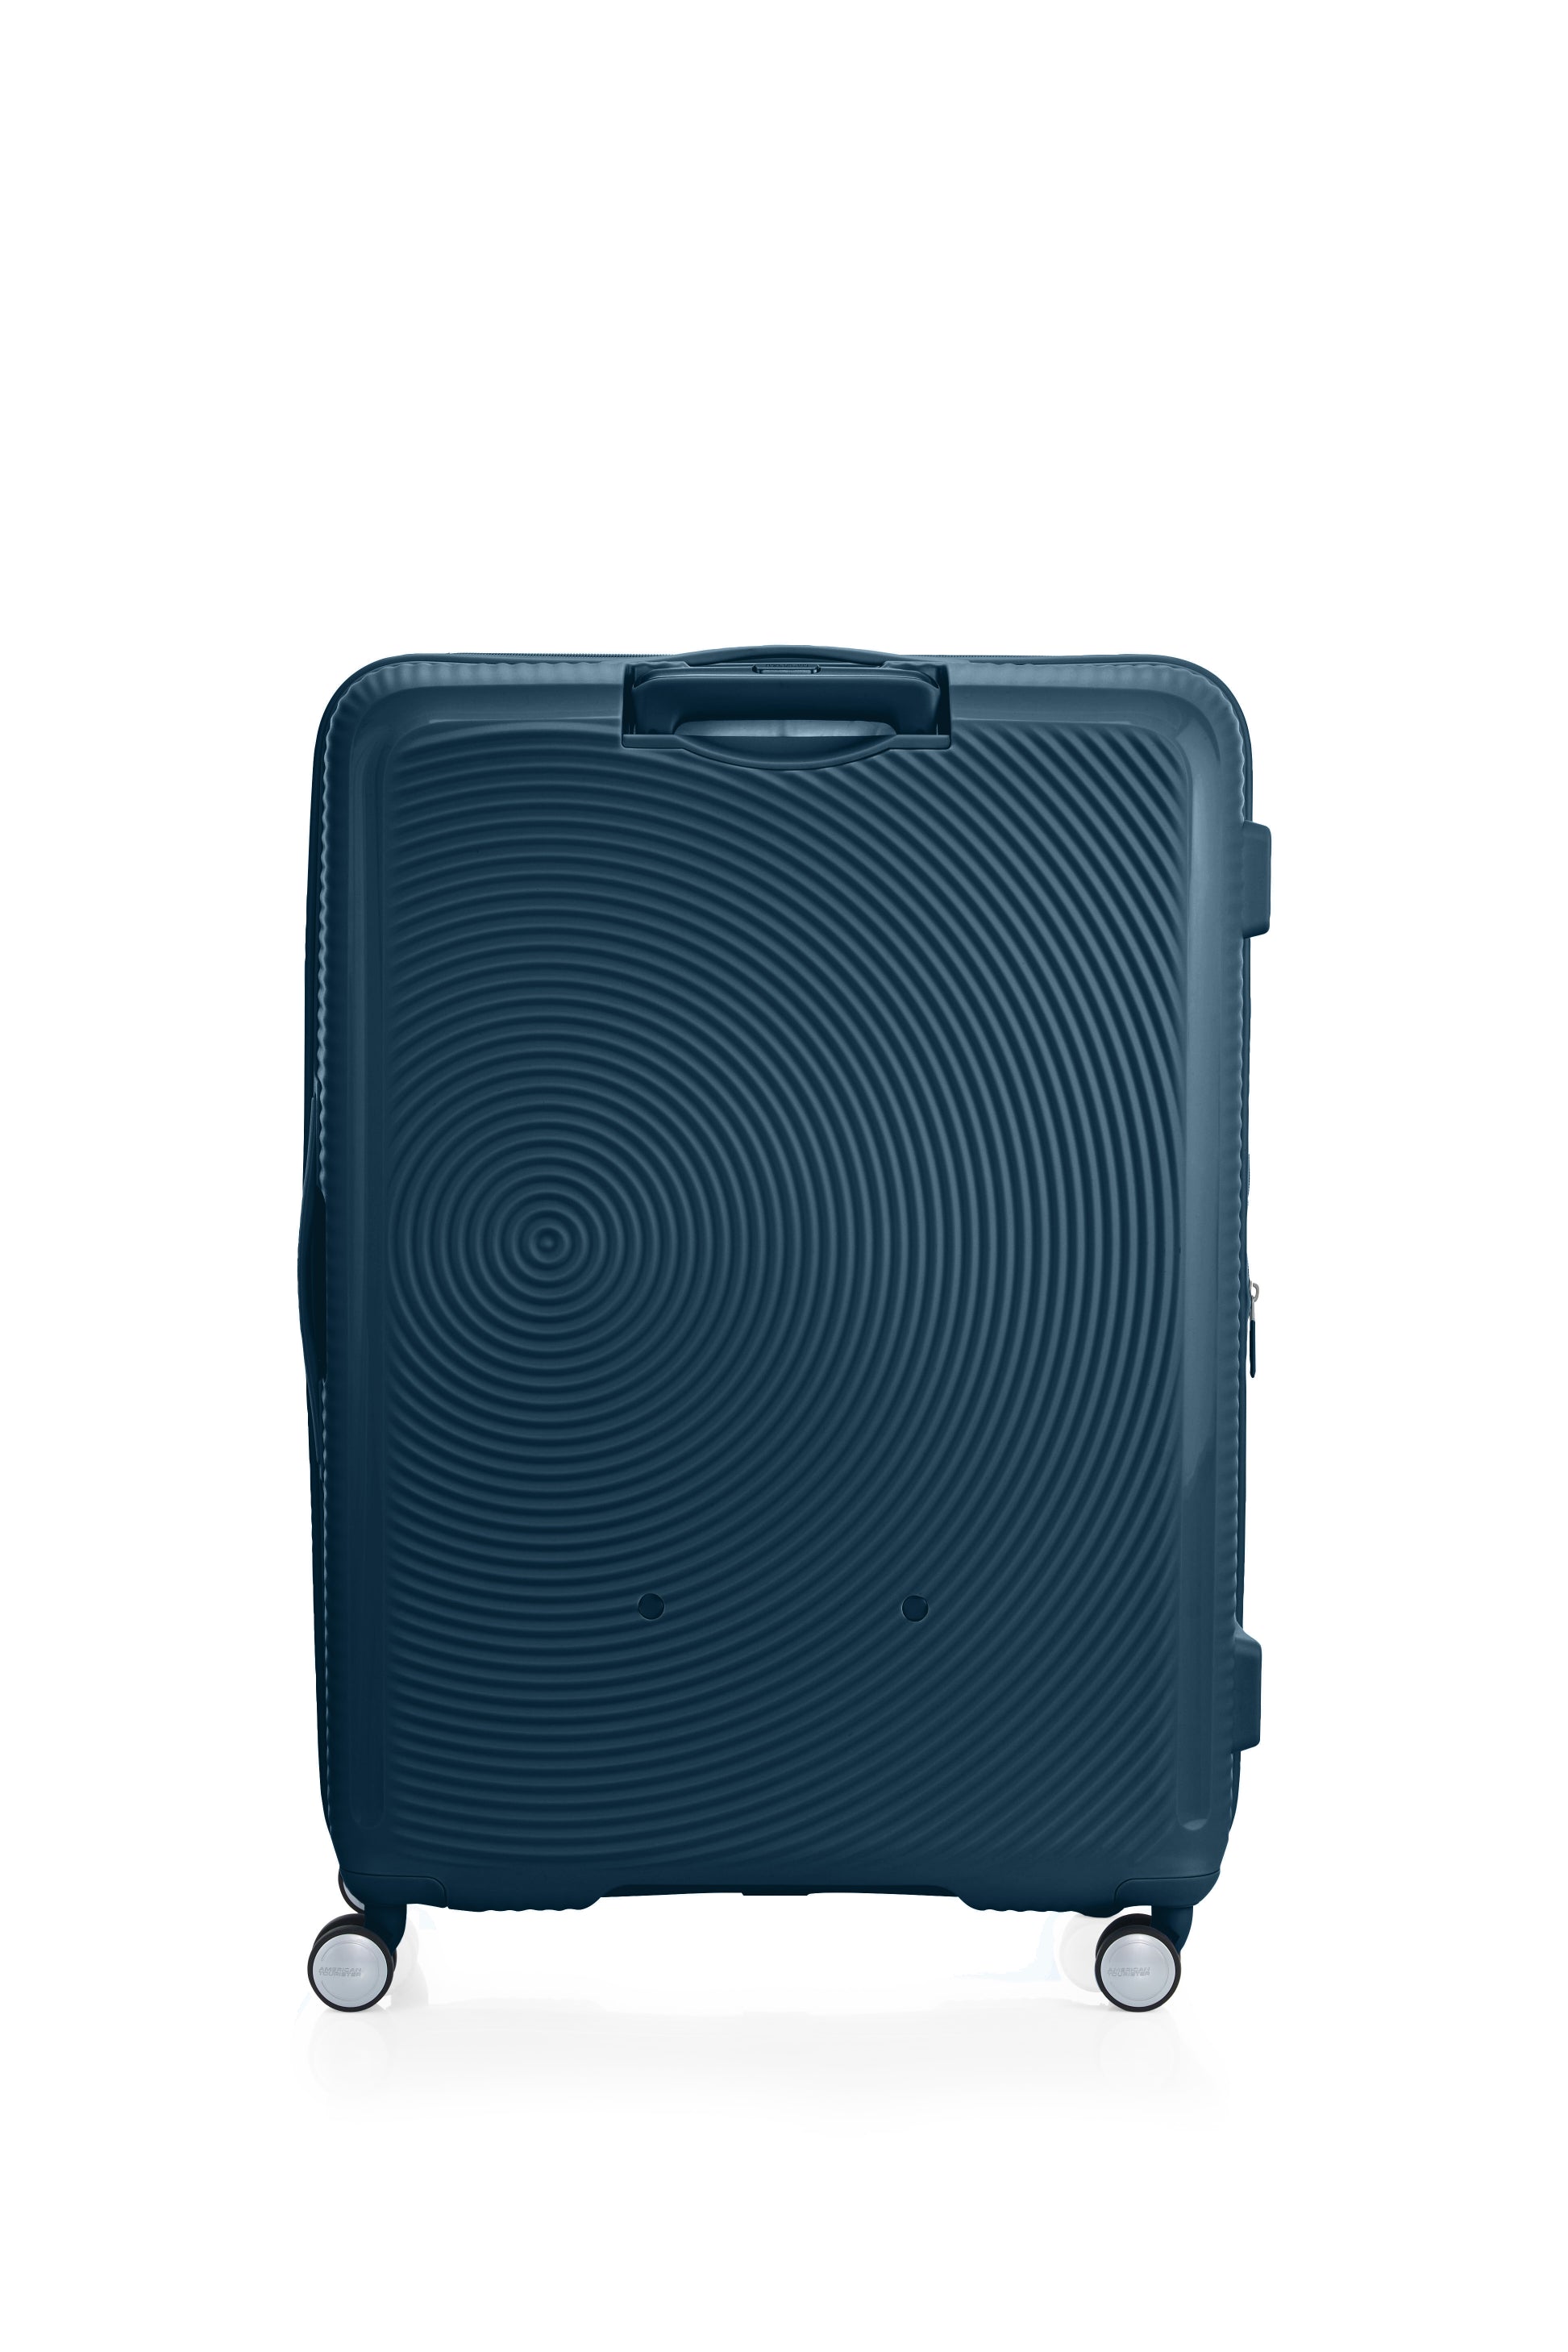 American Tourister - Curio 2.0 80cm Large Suitcase - Varsity Green-3